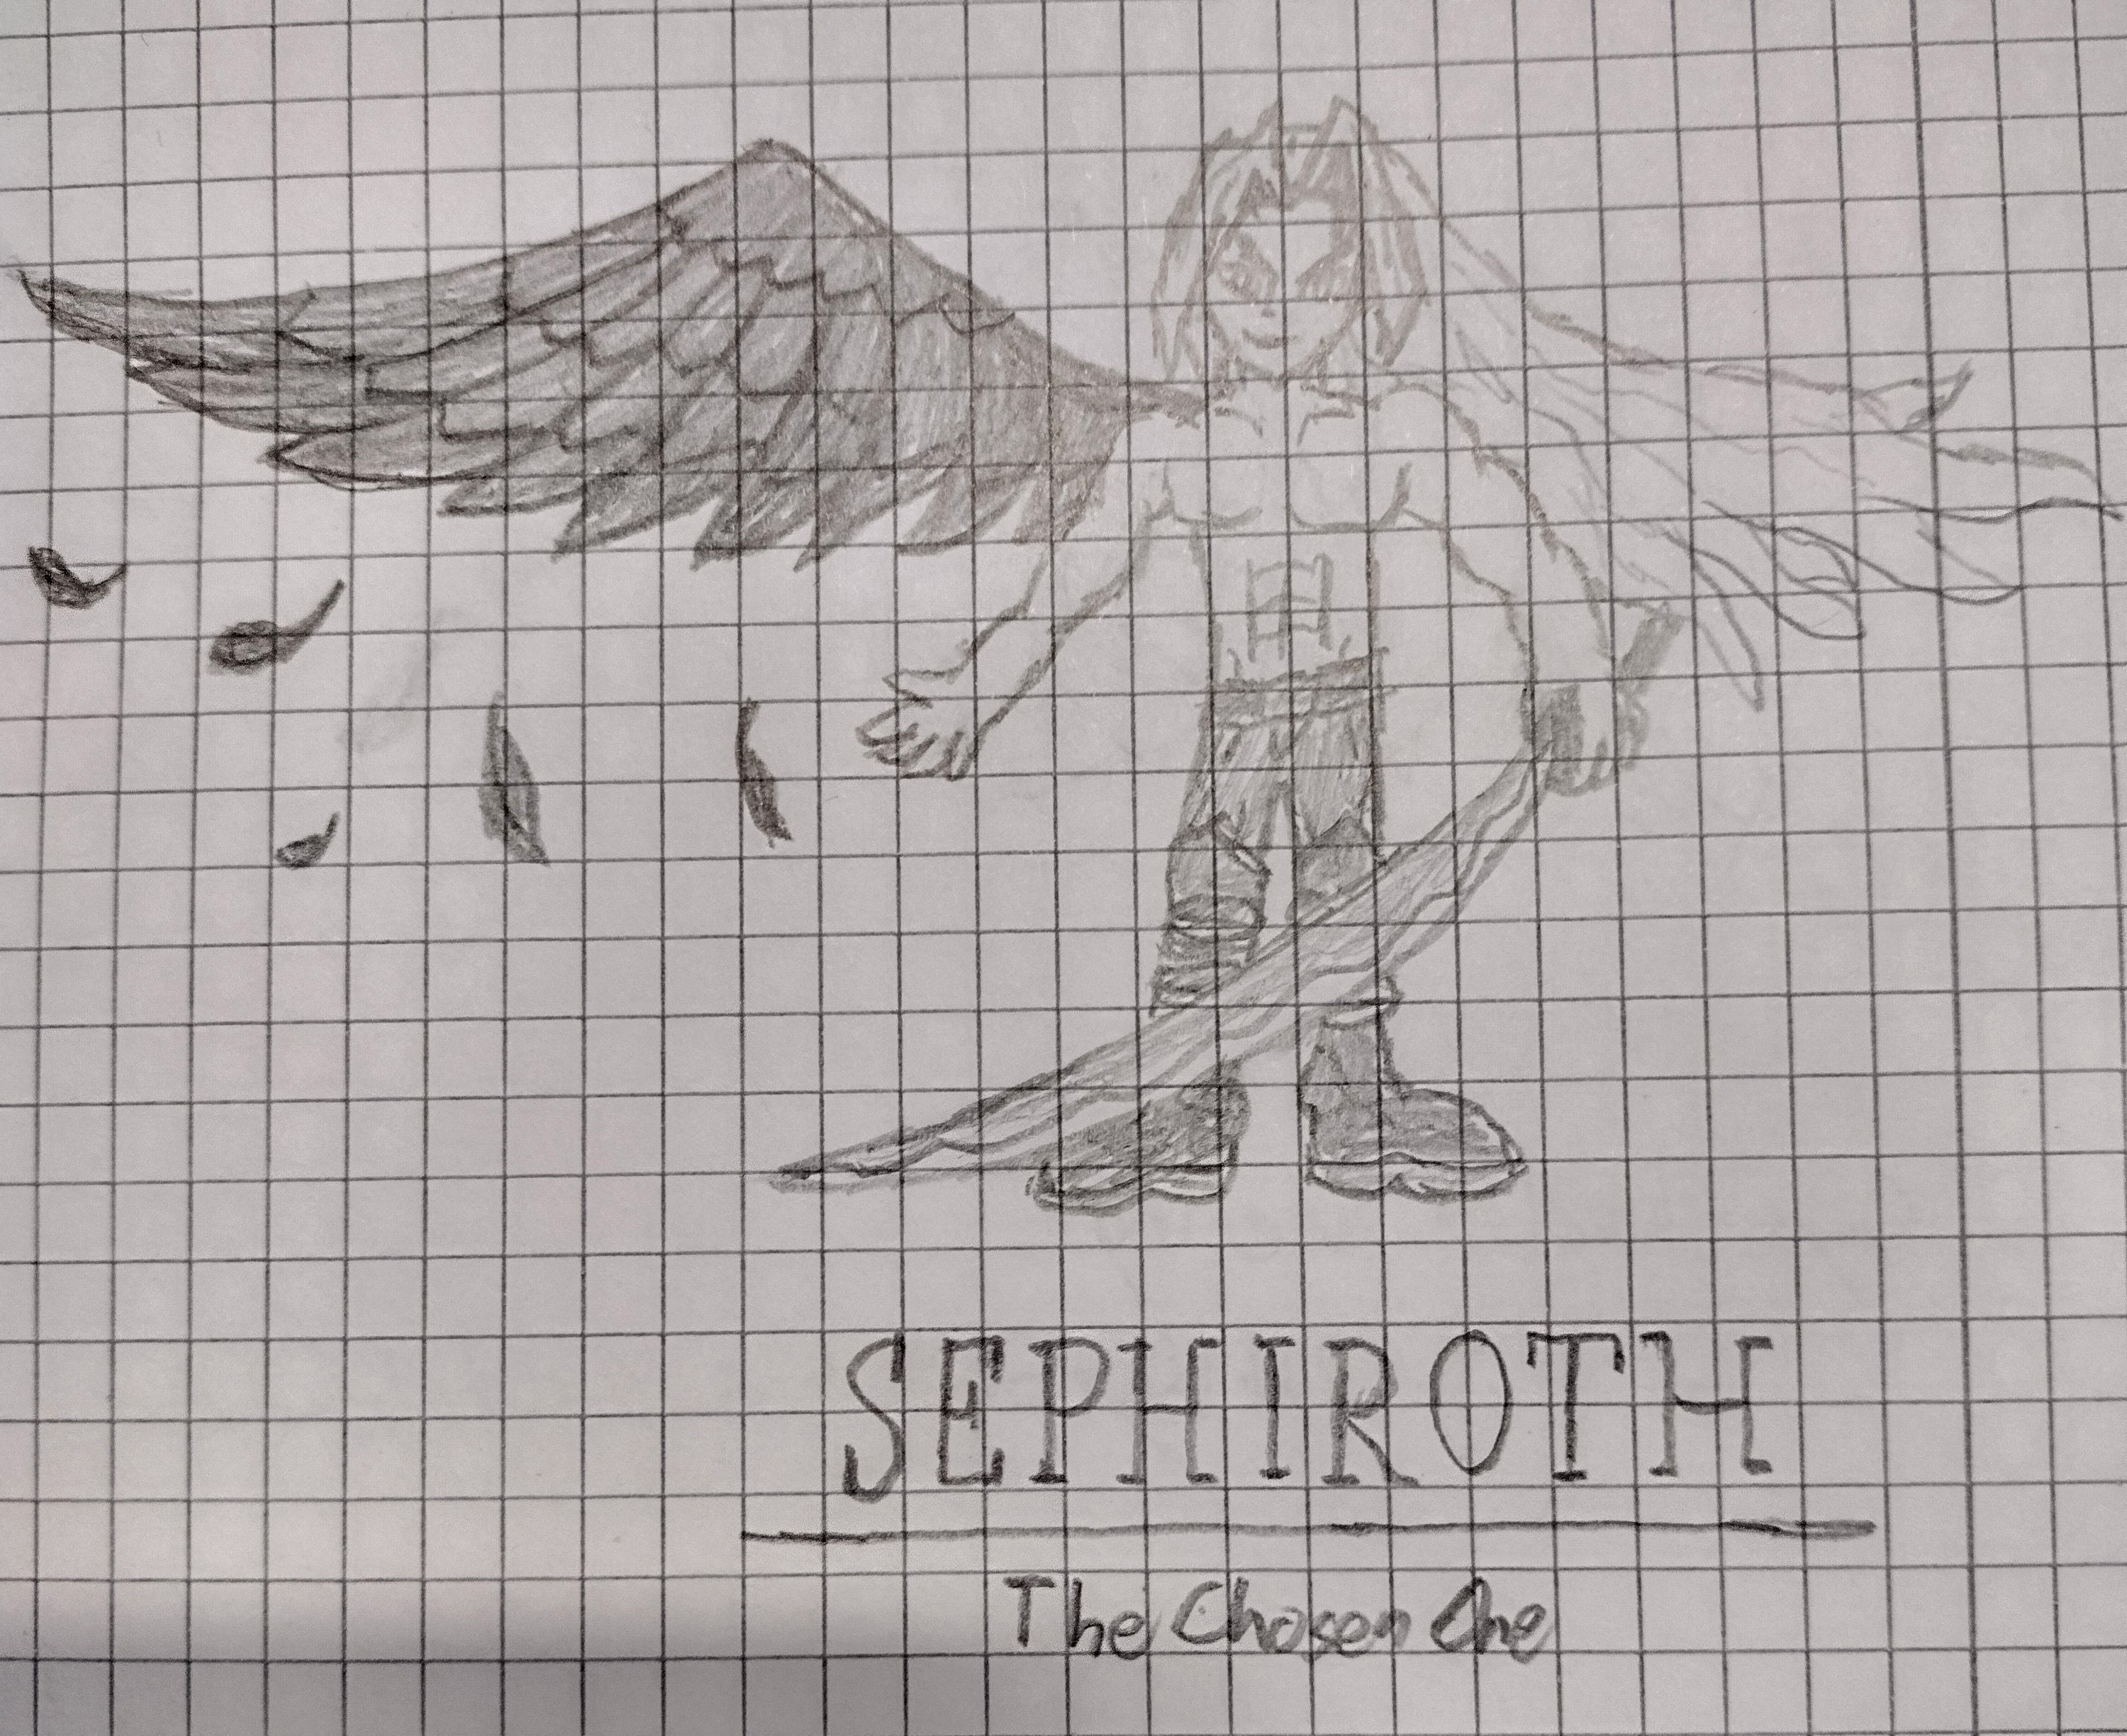 Sephiropth_The_Chosen_One.jpg